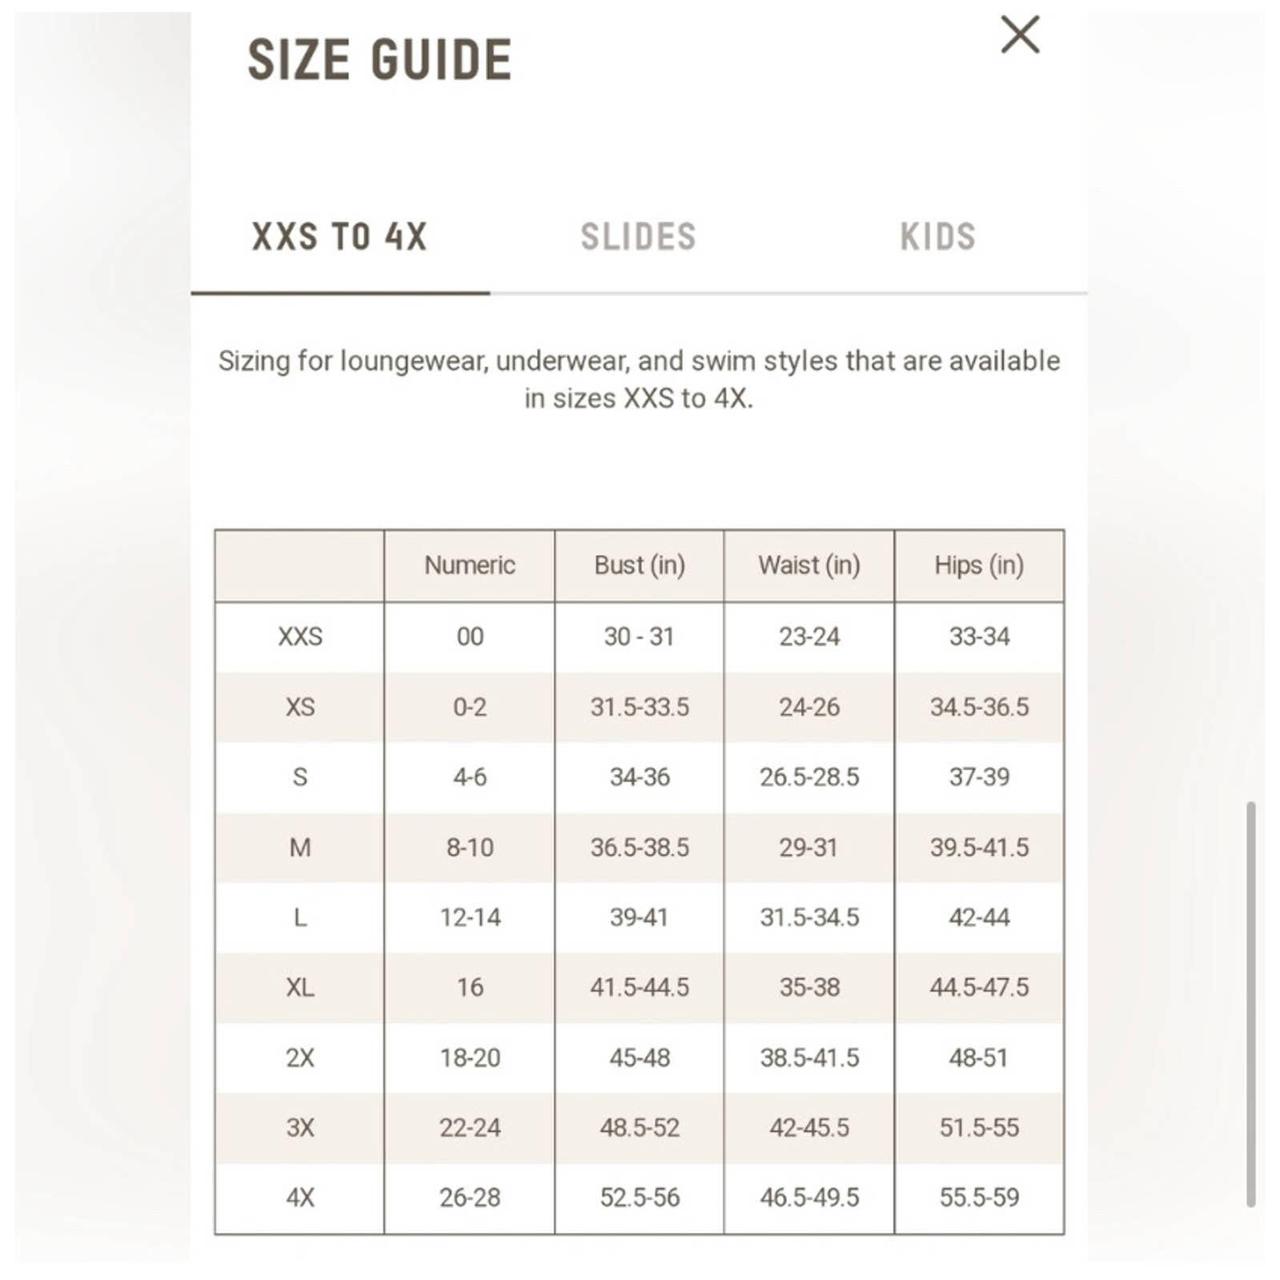 SKIMS Cotton Rib Bodysuit Color Mineral Size XL NWT - Depop